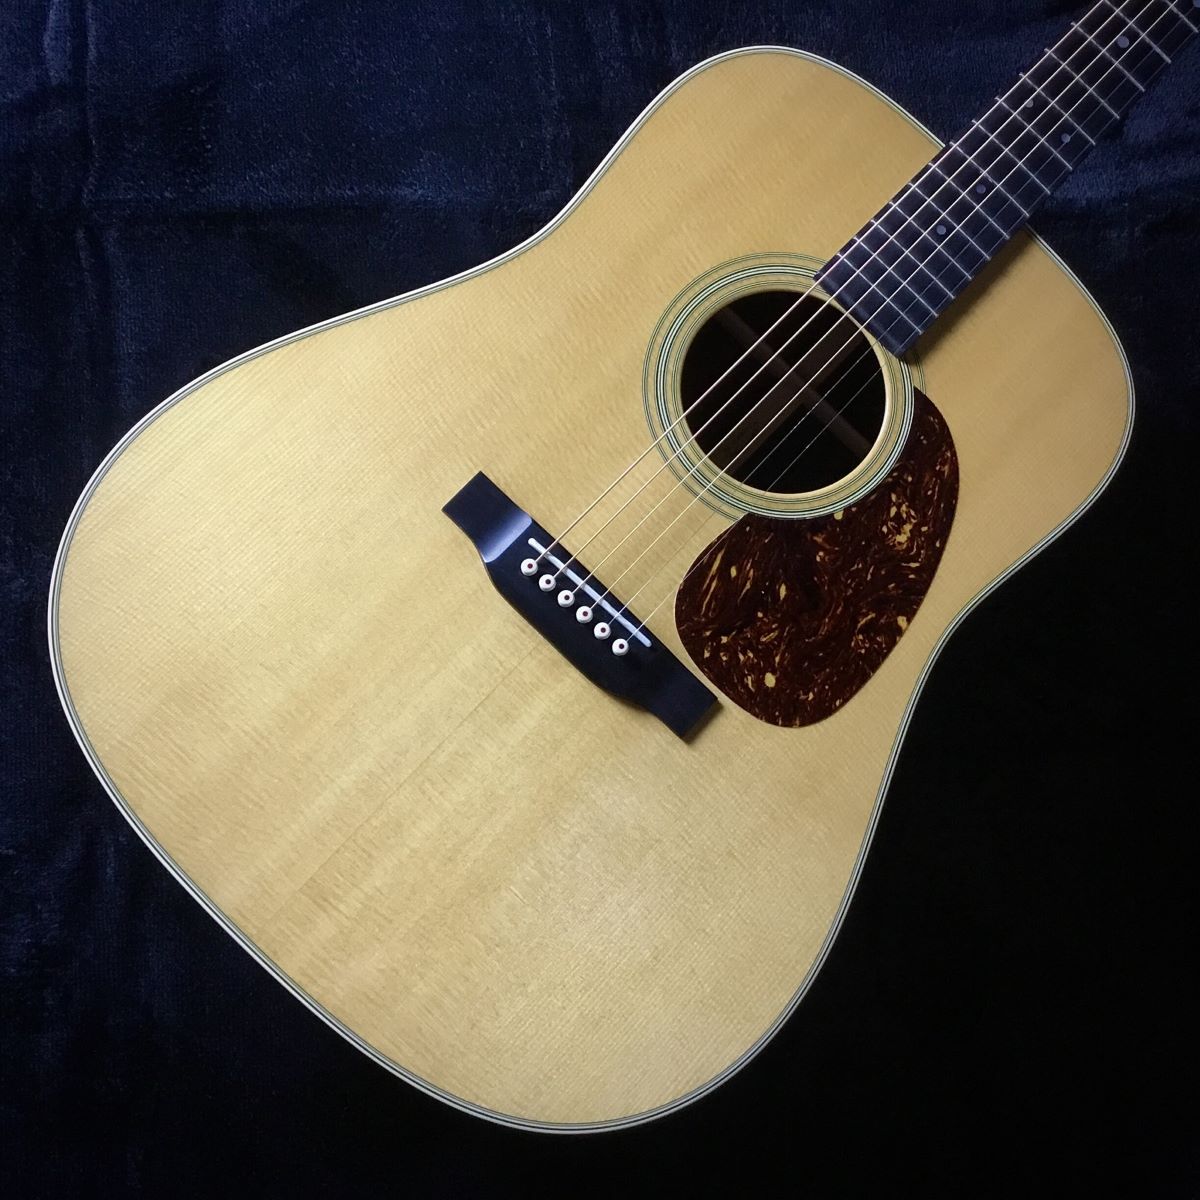 Martin D-28 Standard アコースティックギター【現物画像】【修理痕